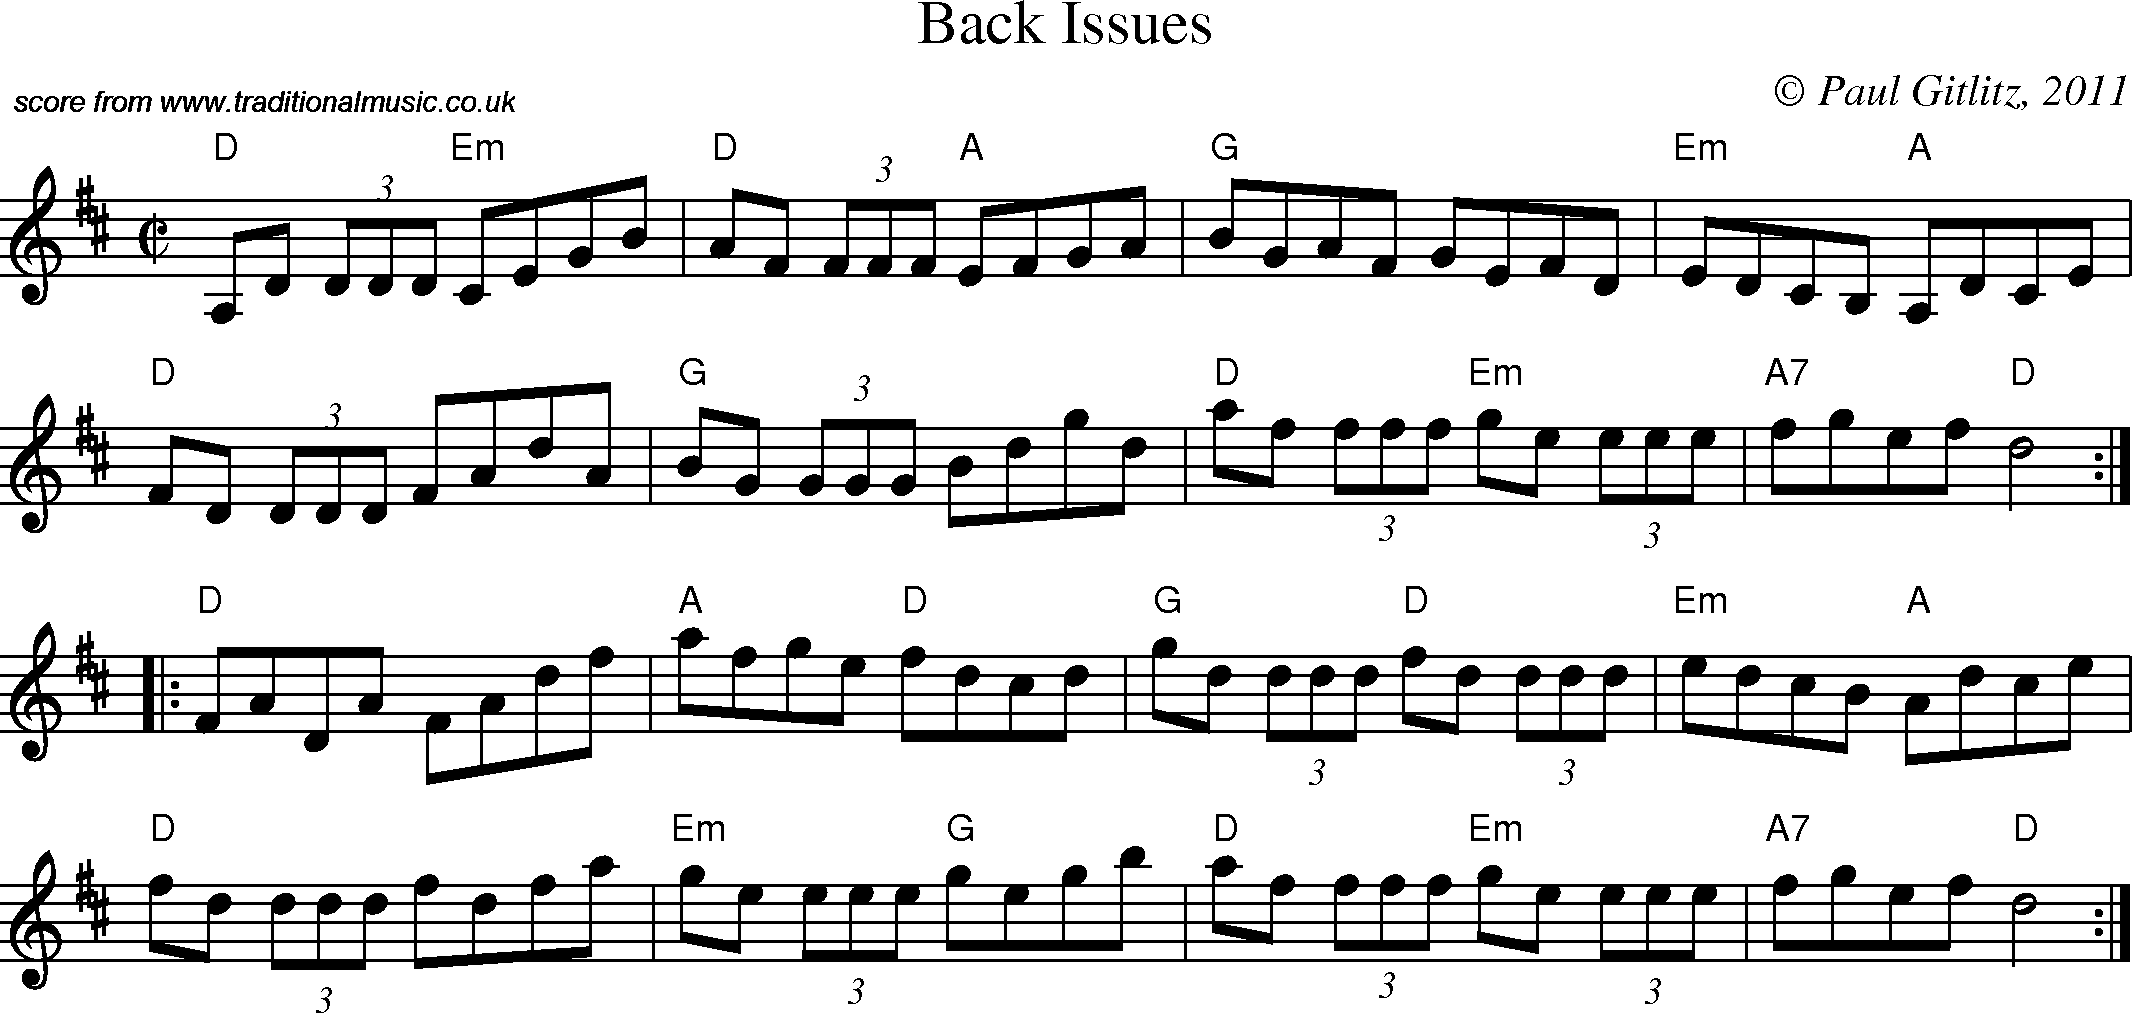 Sheet Music Score for Reel - Back Issues